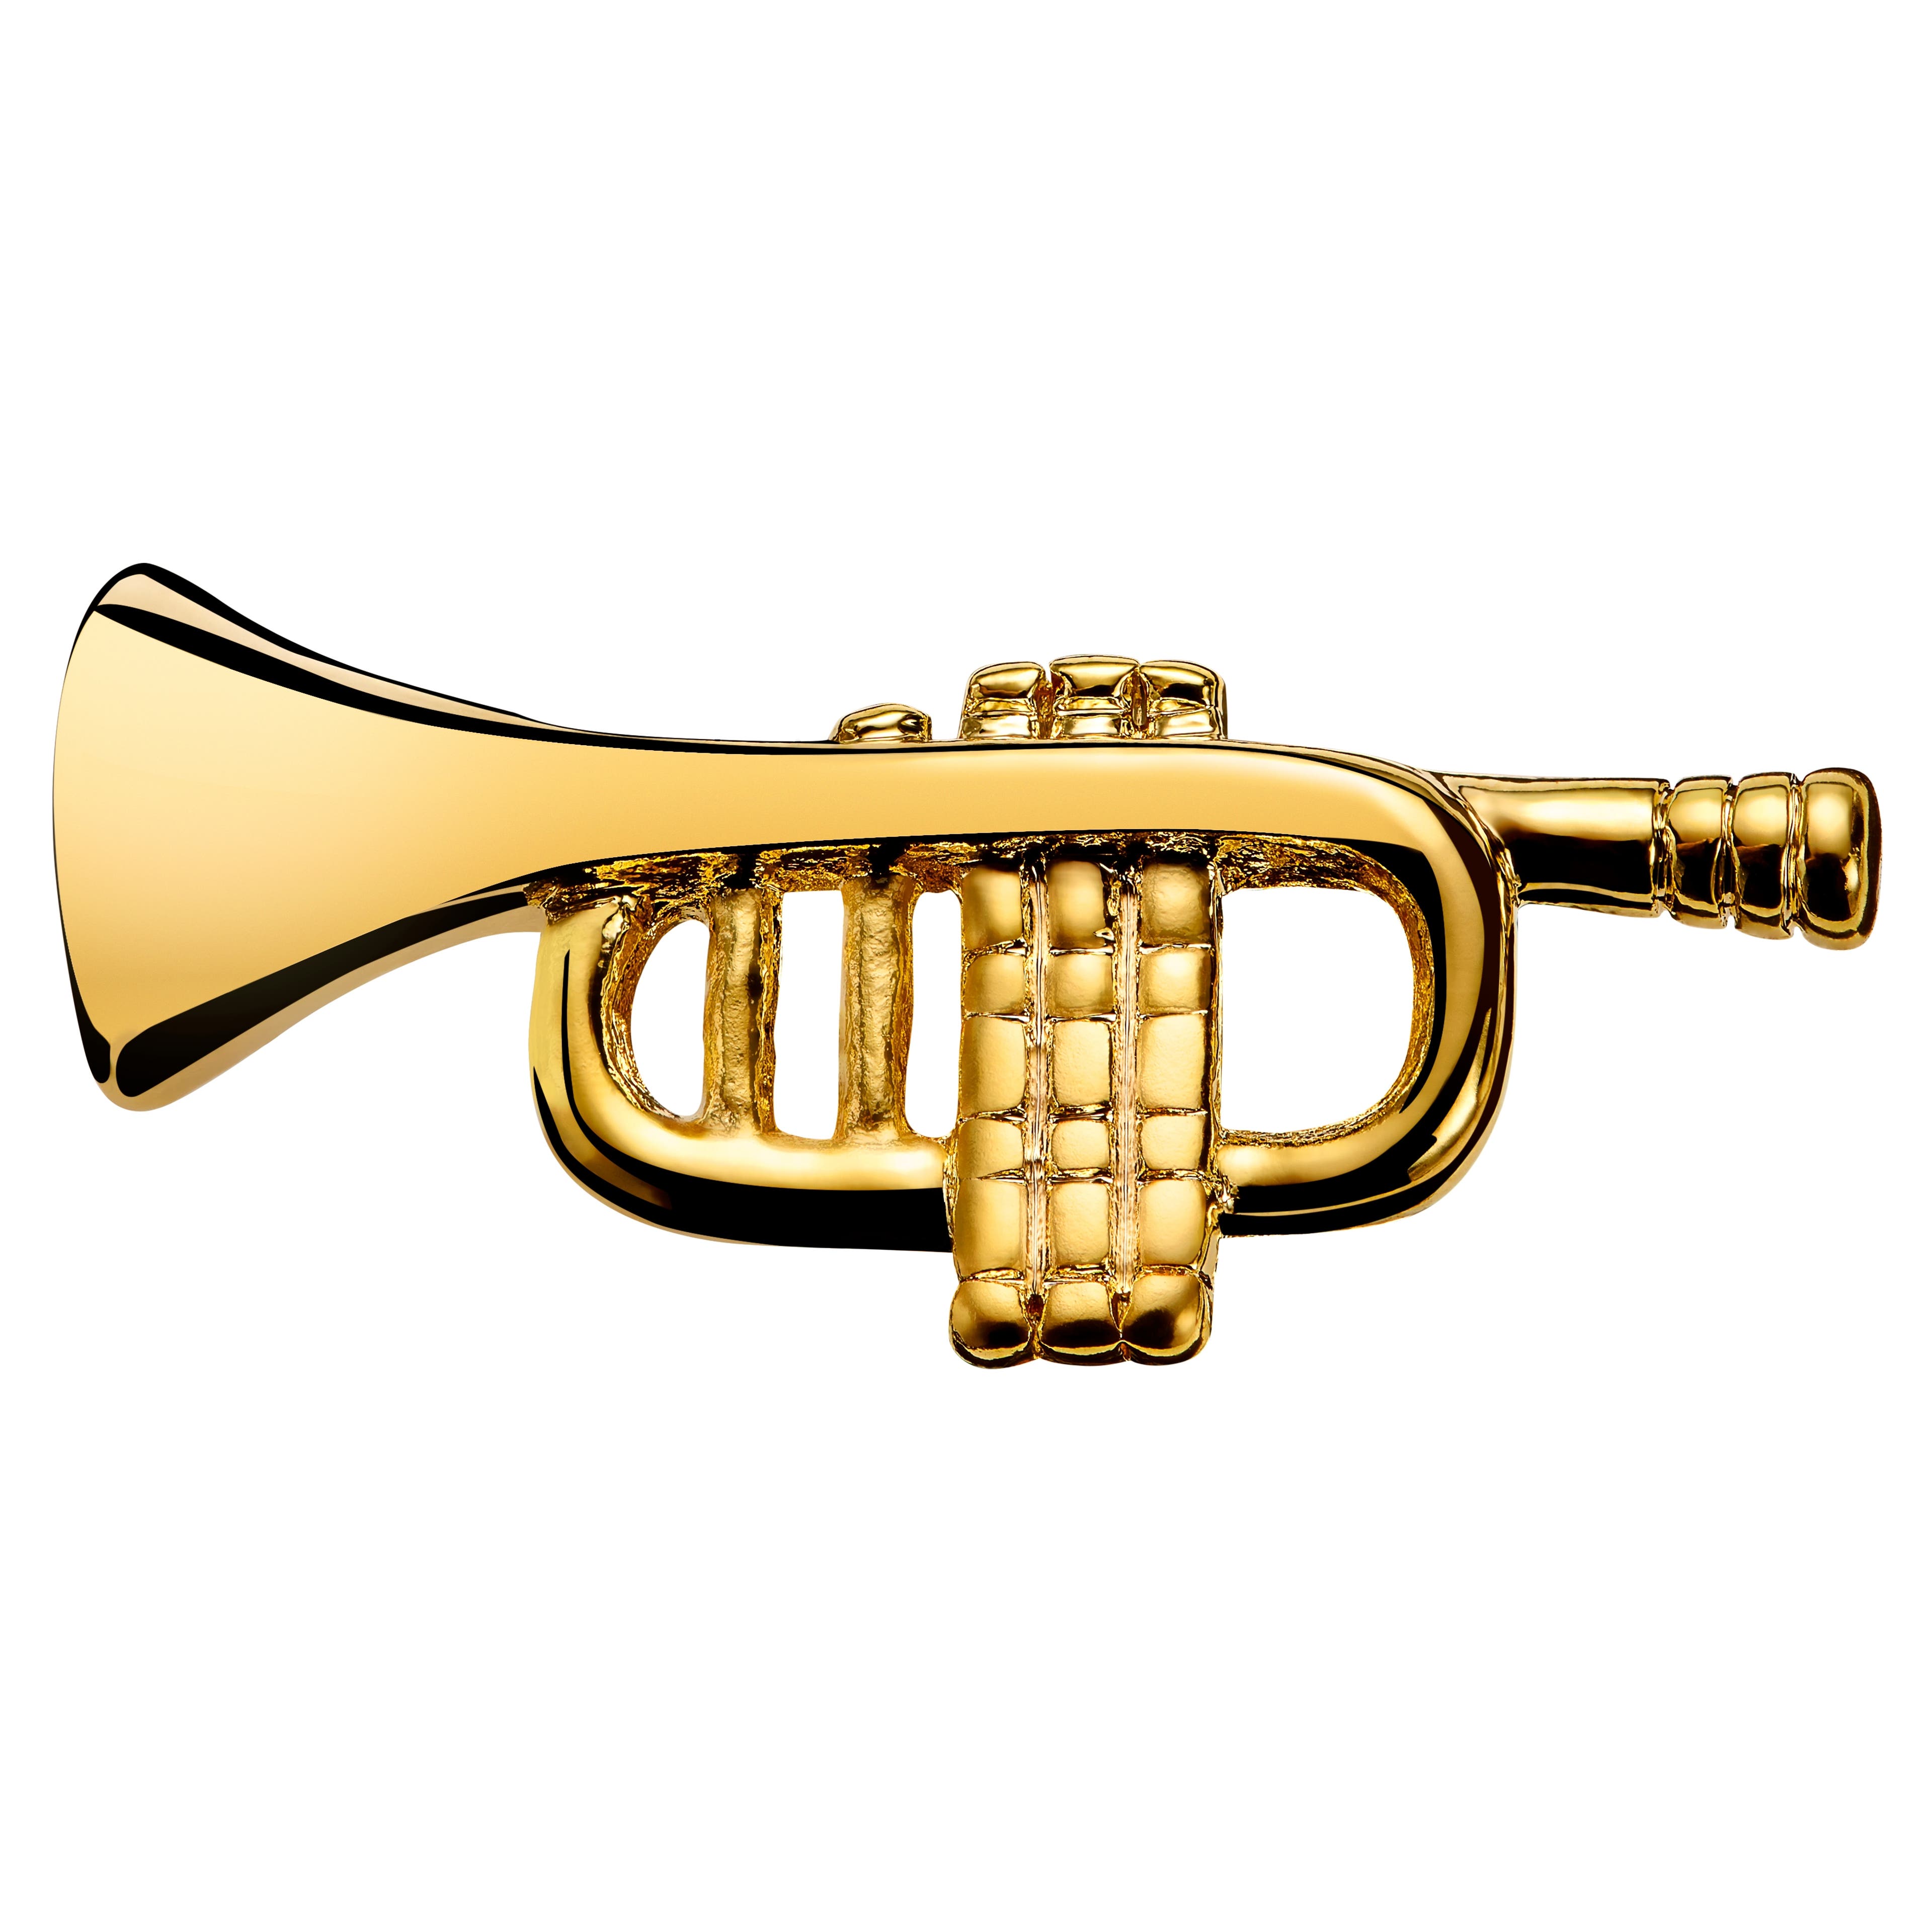 Echus | Gulltonet Jakkeslagsnål med trompet